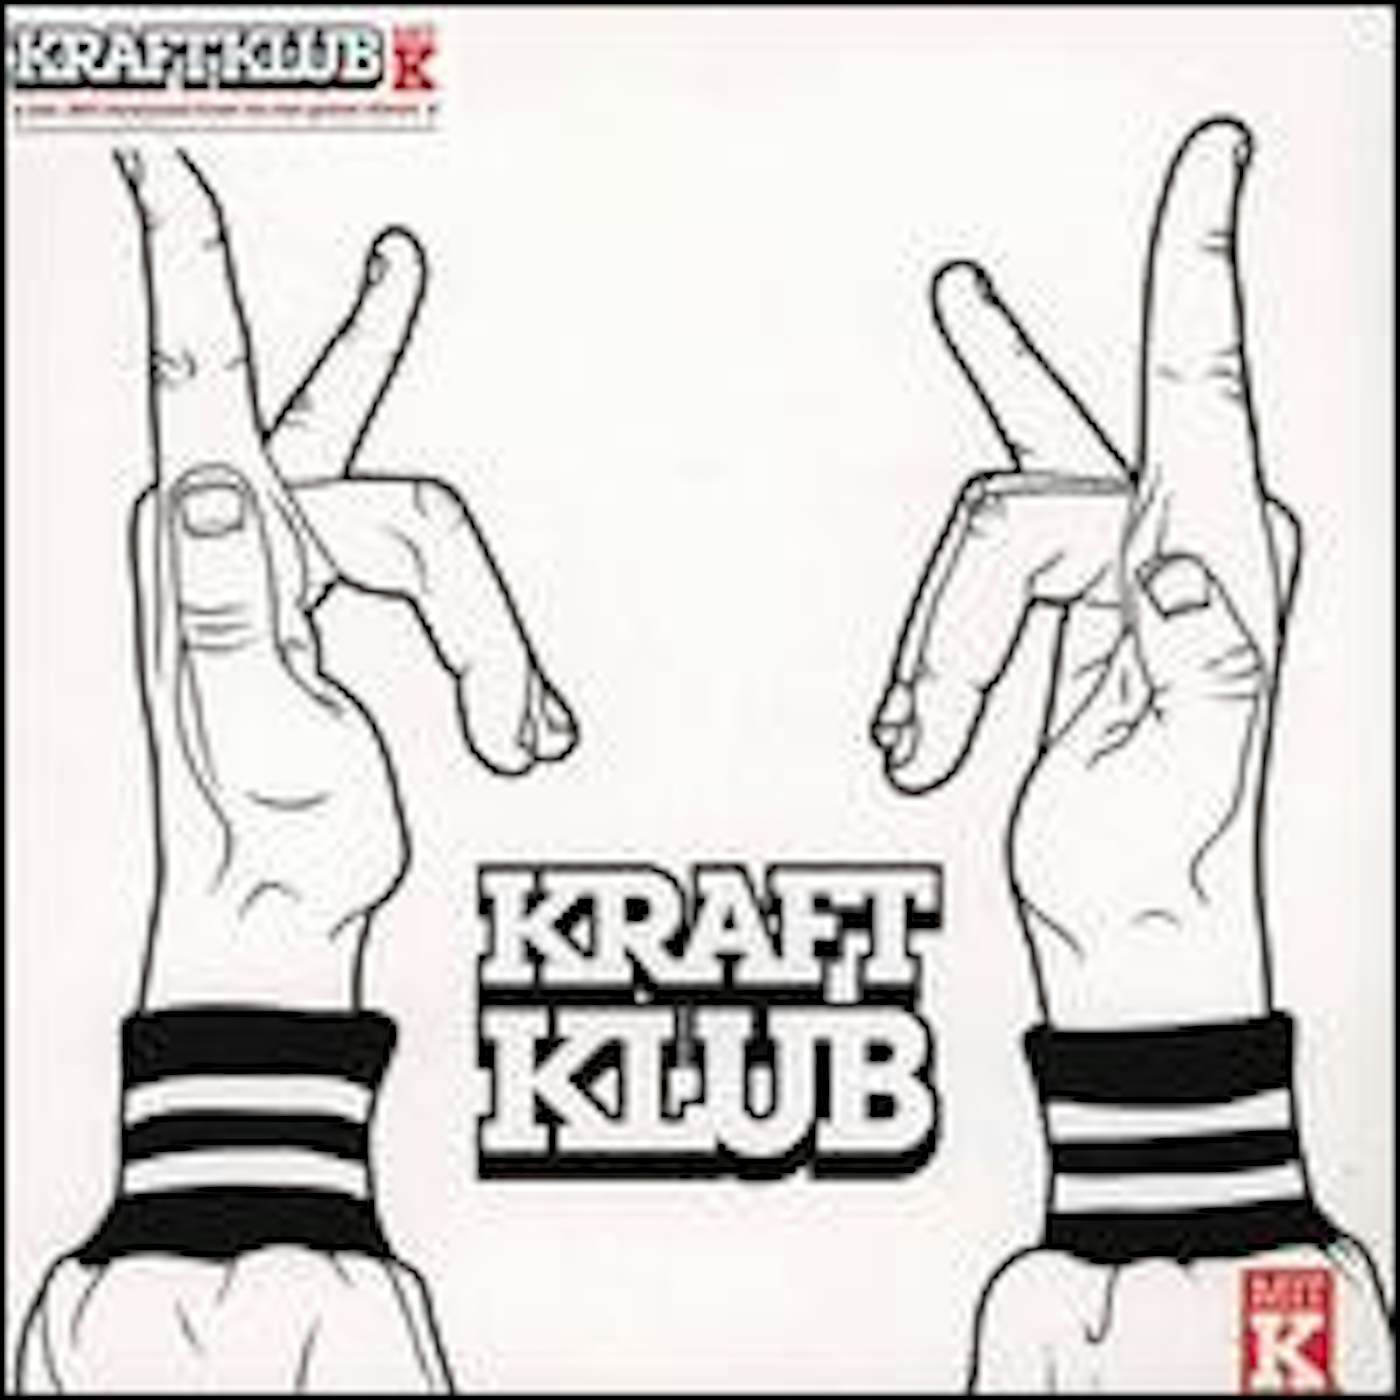 Kraftklub Mit K Vinyl Record